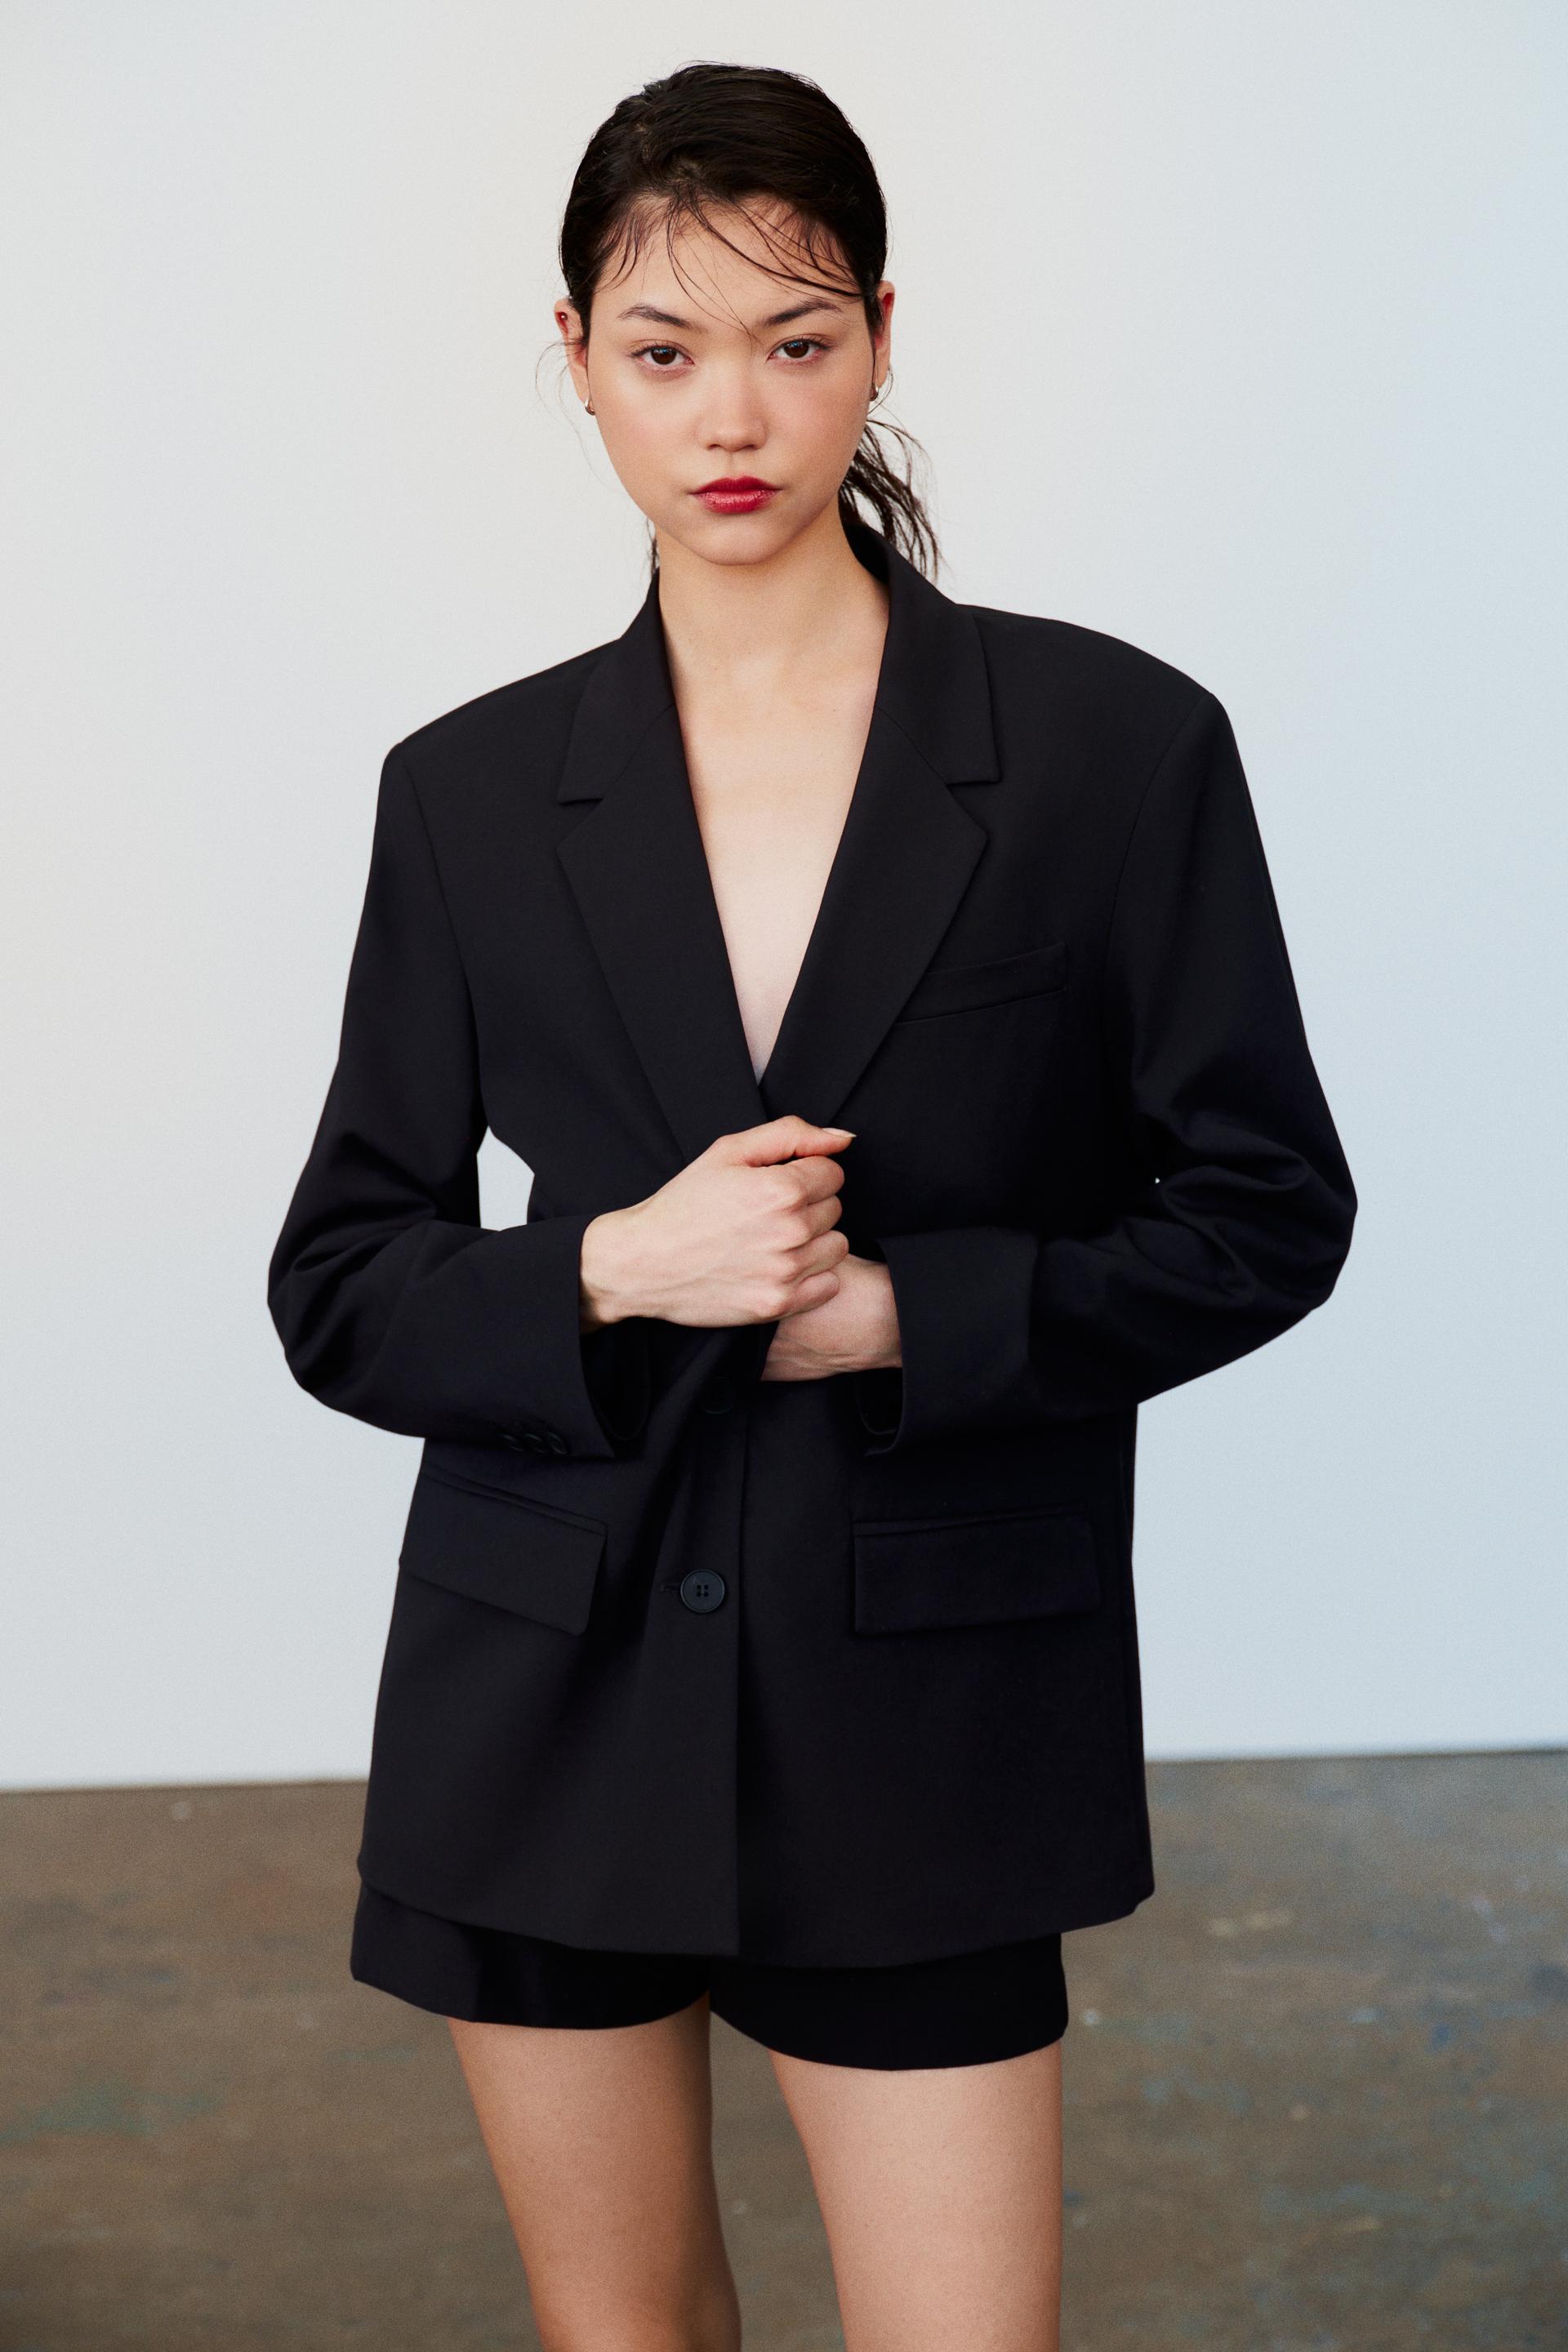 NYC store - 🙊Novedades! Blazer negra con hombreras abullonadas, un  esencial que no puede faltar en tu armario. 📞Pedidos e info 679225742  WhatsApp ➡️Pagos con tarjeta, Bizum o transferencia. #moda#mujer#blazer  #chicas